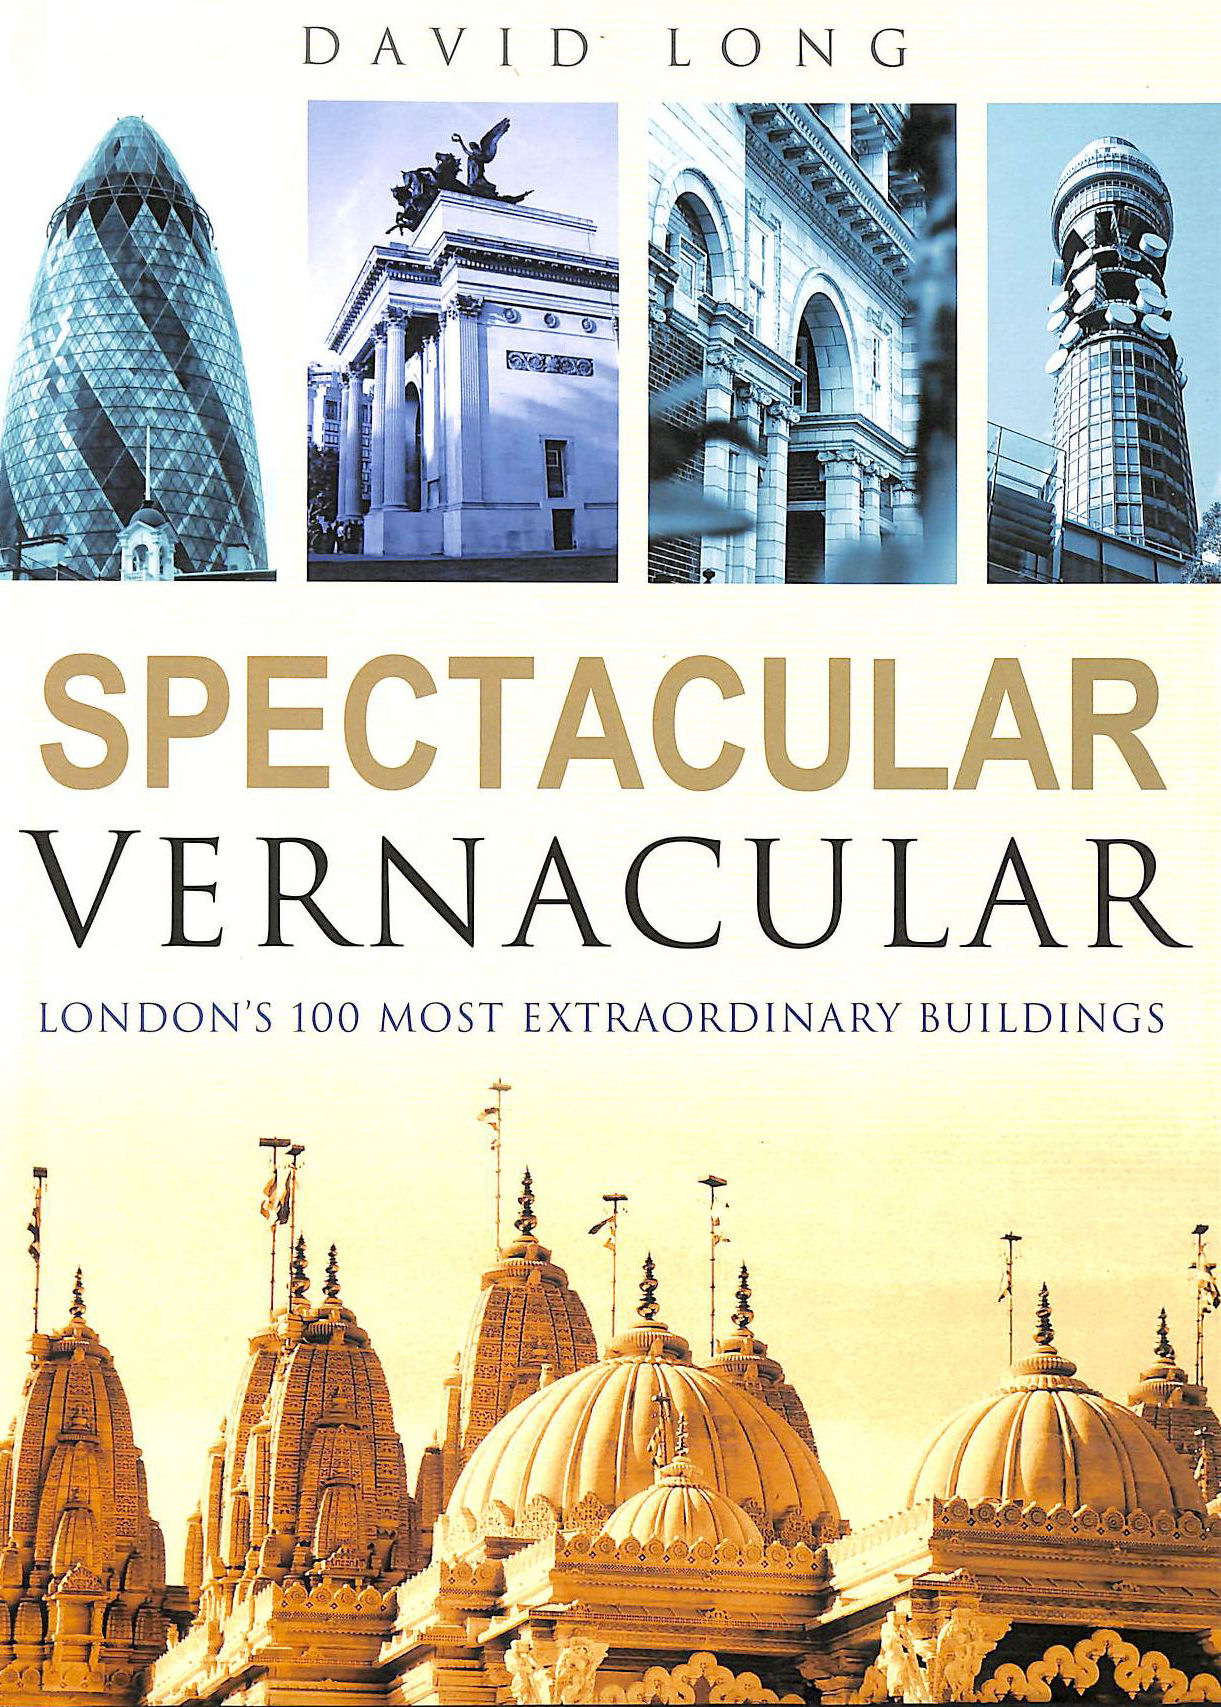 DAVID LONG - Spectacular Vernacular: London's 100 Most Extraordinary Buildings